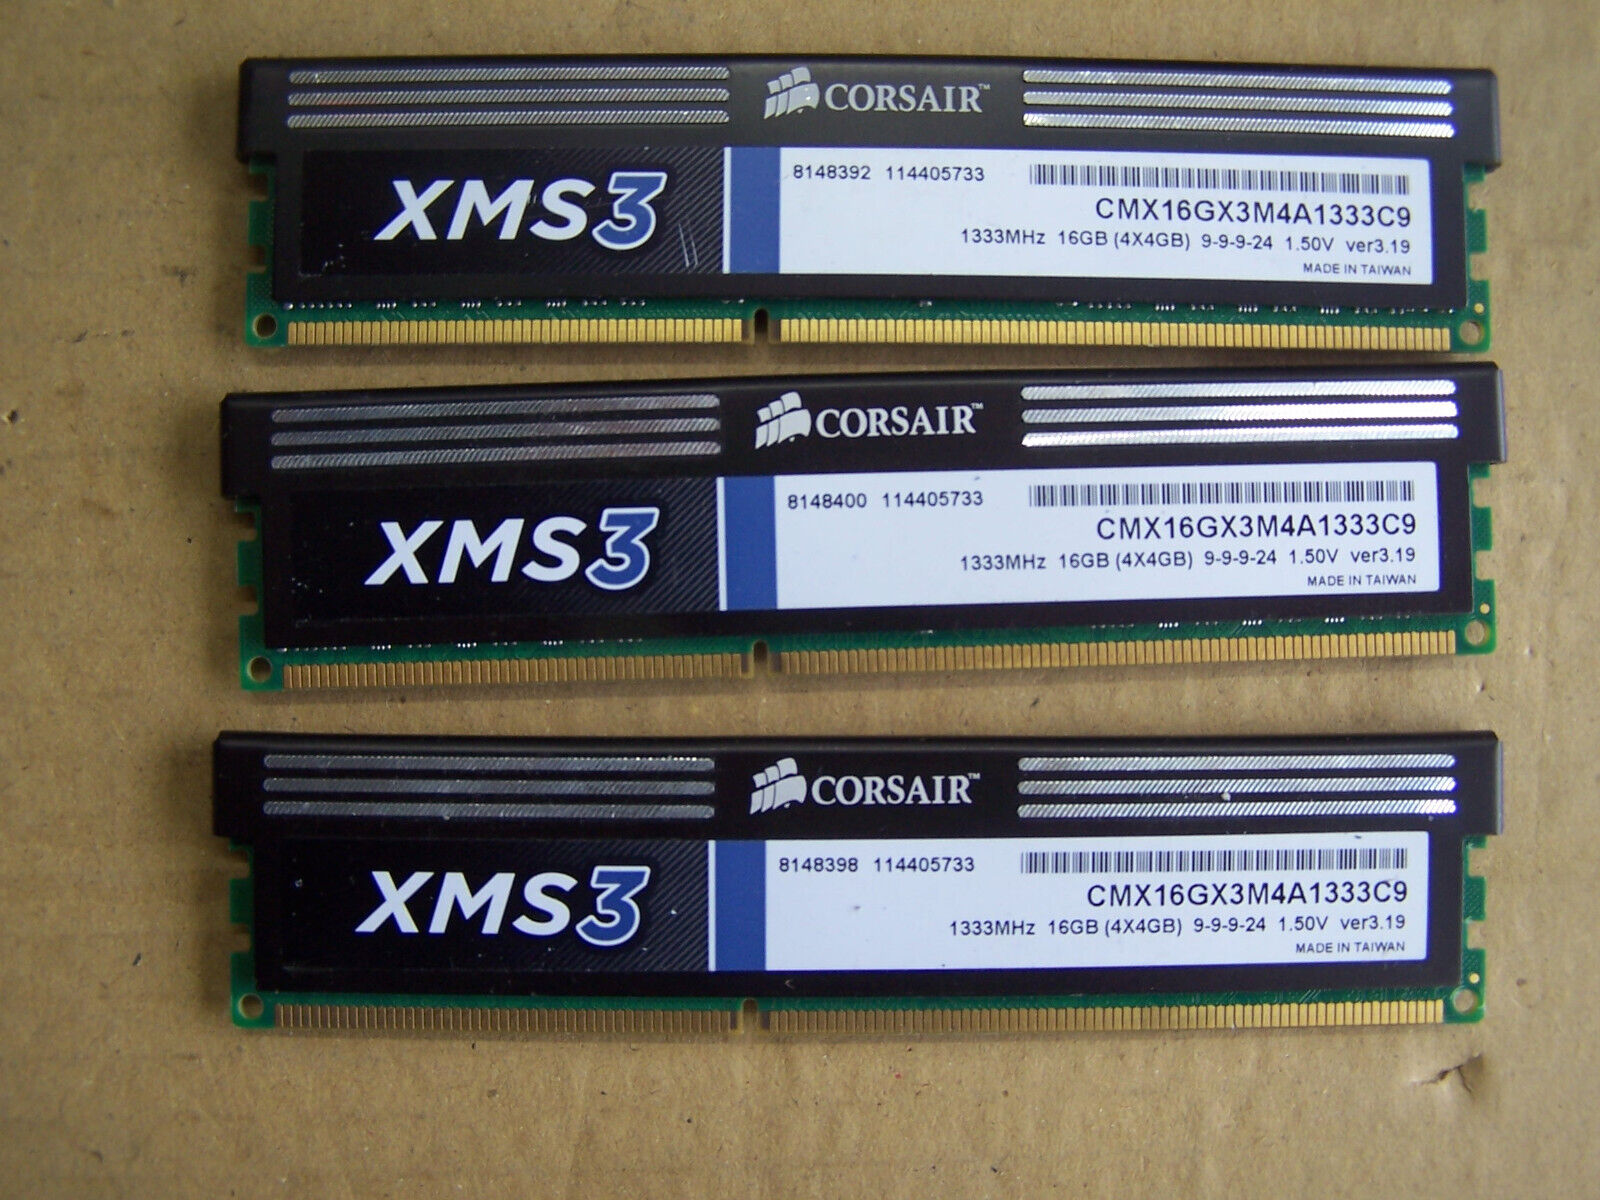 Corsair XMS3 12GB (3x4GB) DDR3 1333 desktop DIMMs PC3-10600U CMX16GX3M4A1333C9